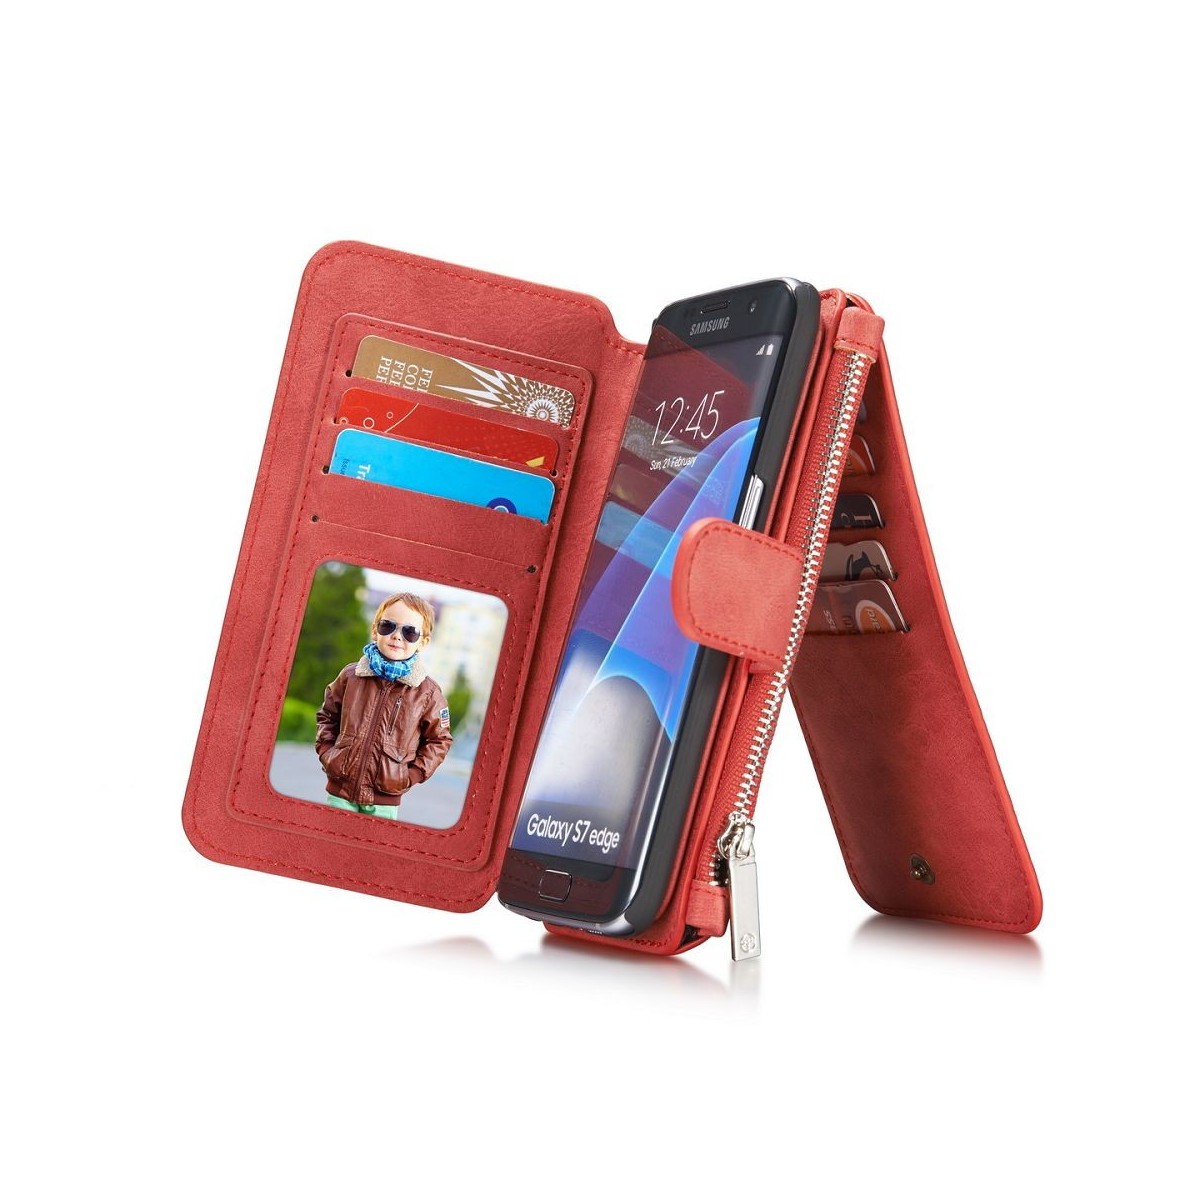 Etui Samsung Galaxy S7 Edge Portefeuille multifonctions Rouge - CaseMe